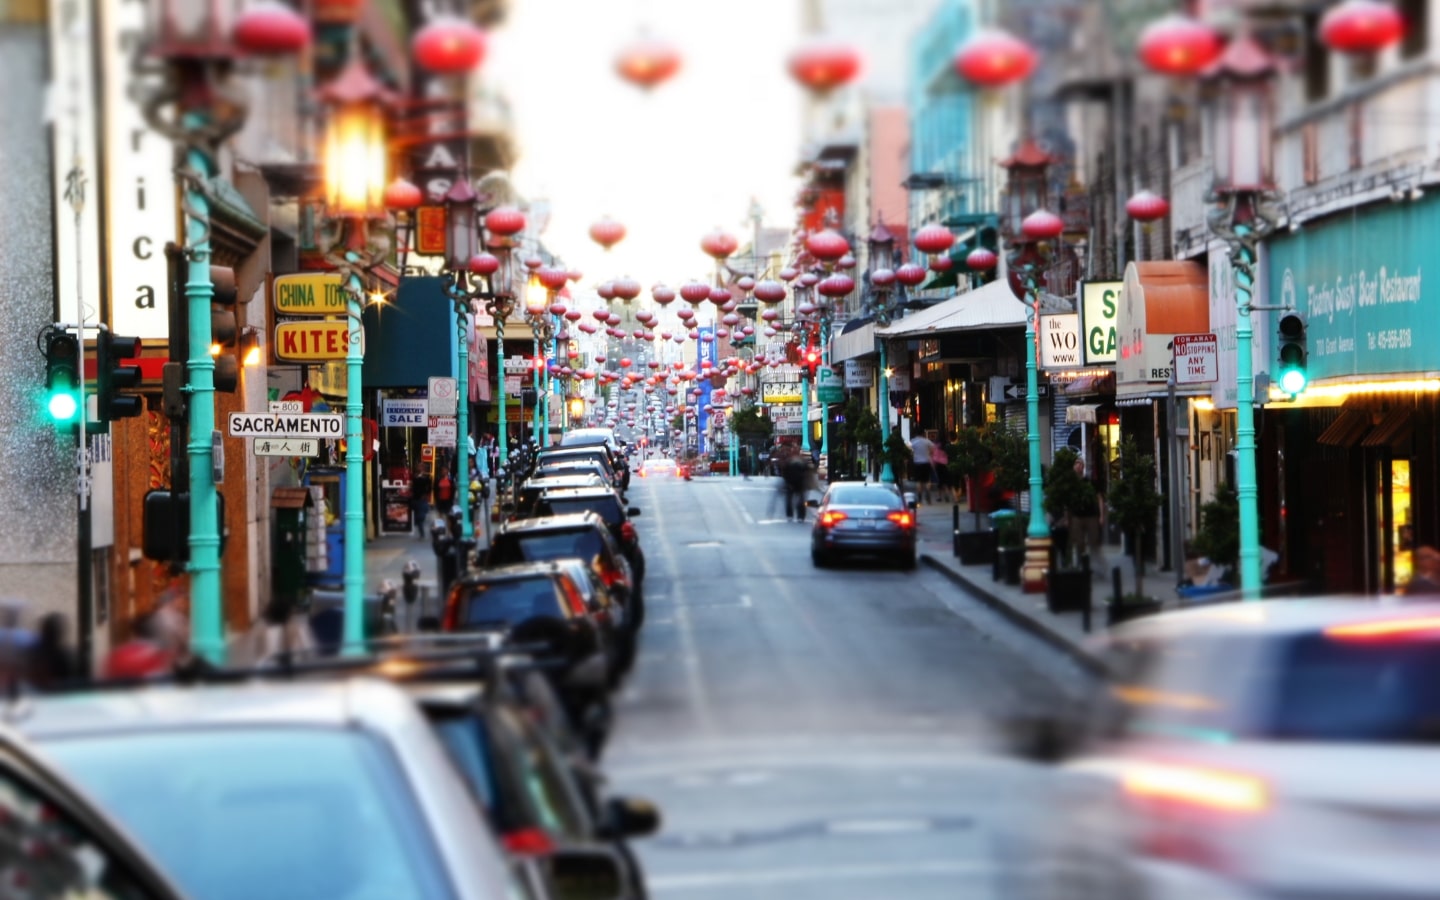 Chinatown San Francisco in December